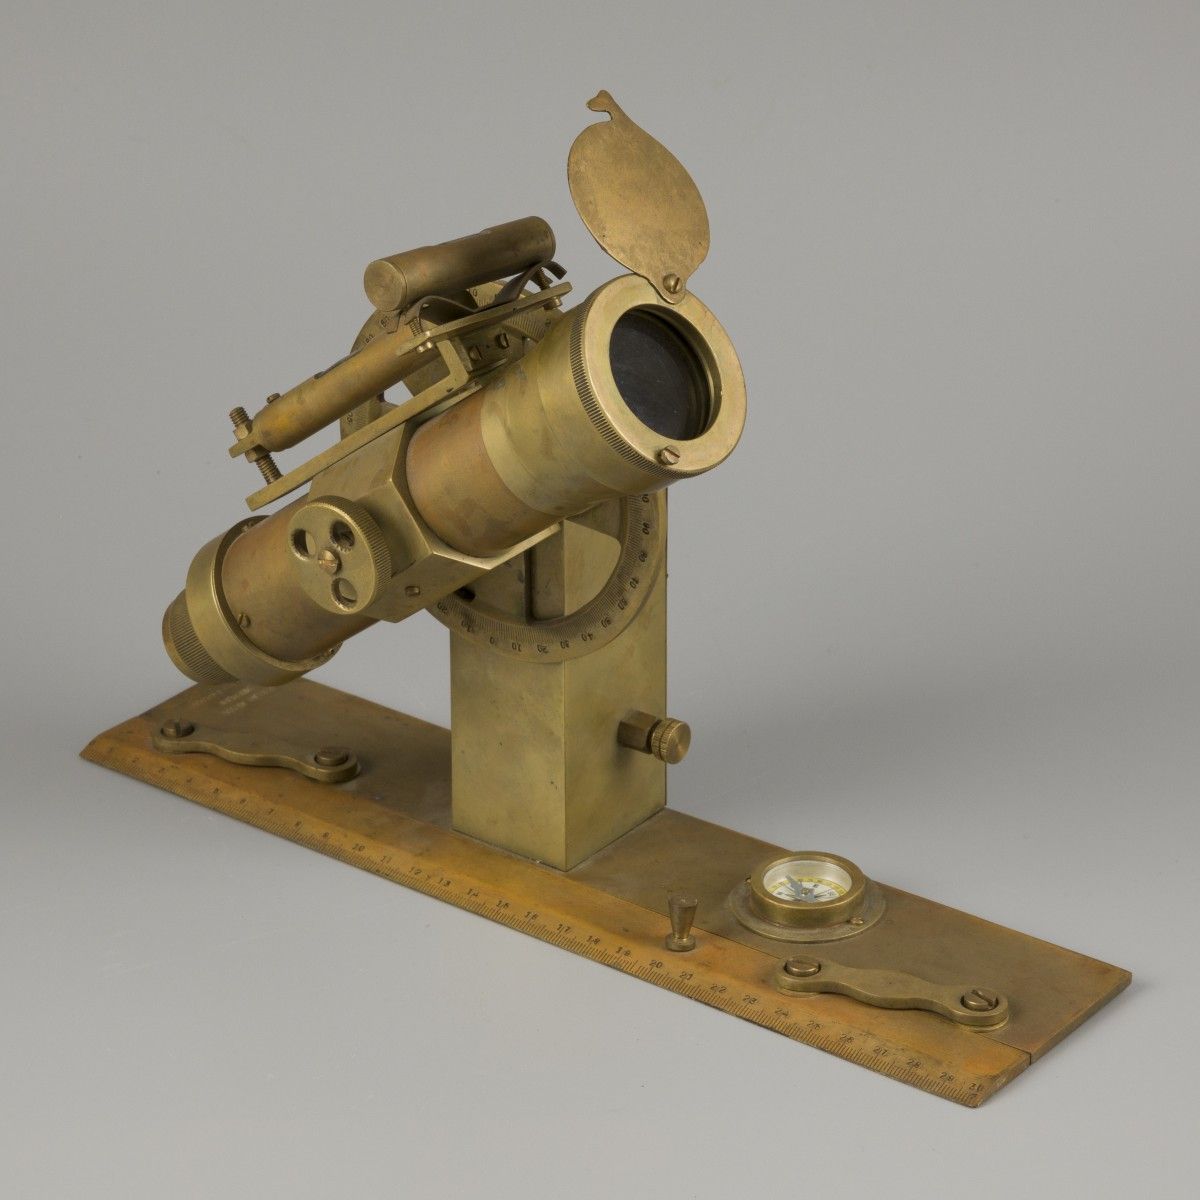 A surveyors' "Gustav Heyde" brass level spirit instrument (transit/ theodolite),&hellip;